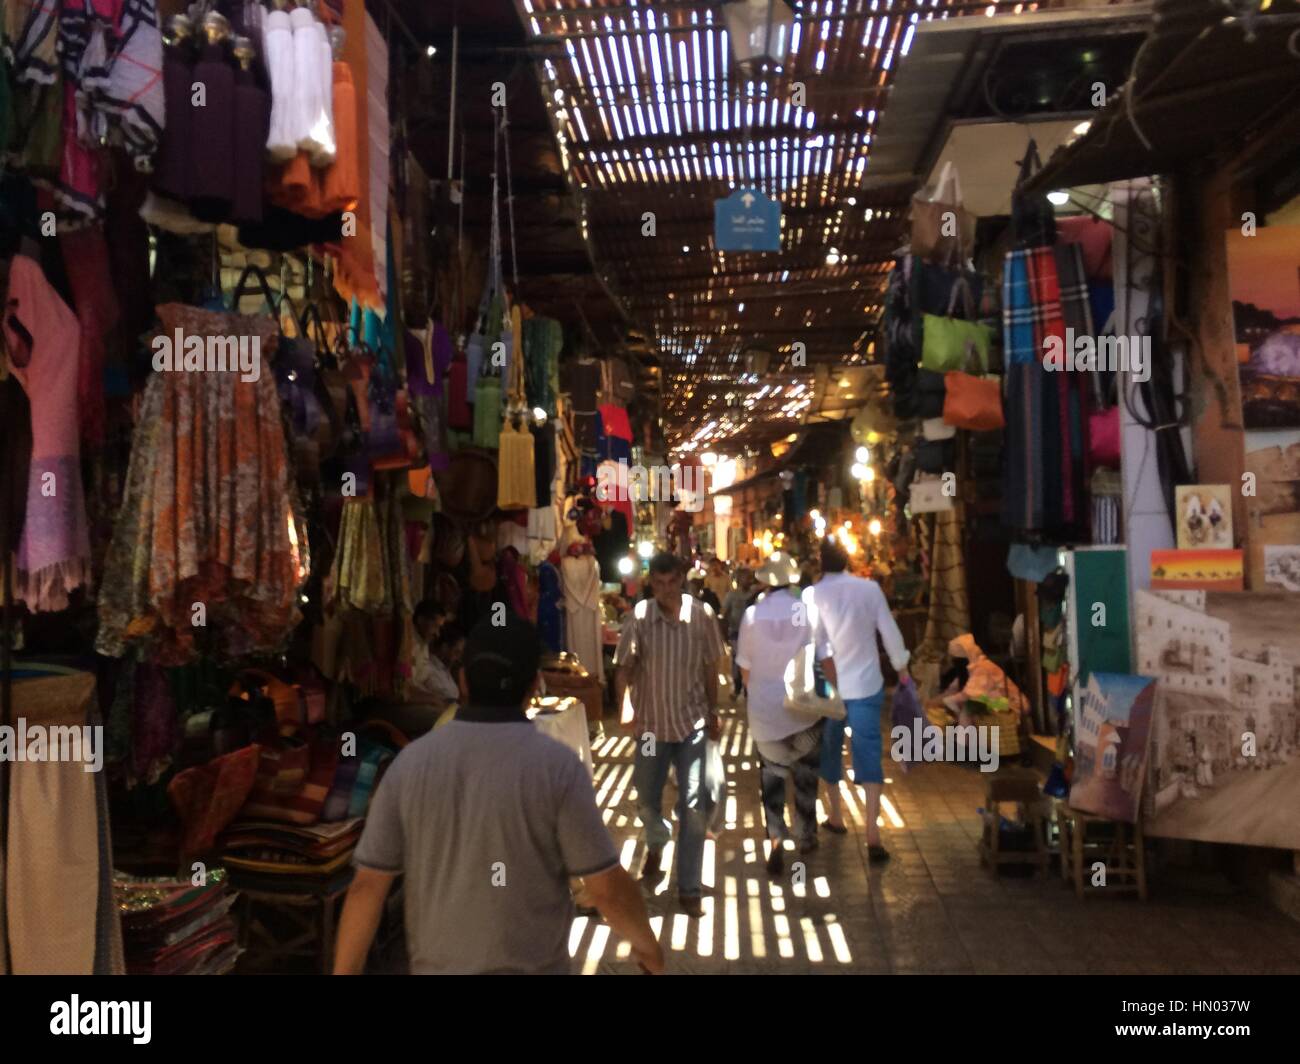 Market souk bazaar in Marrakech, Morocco's historic medina. Stock Photo